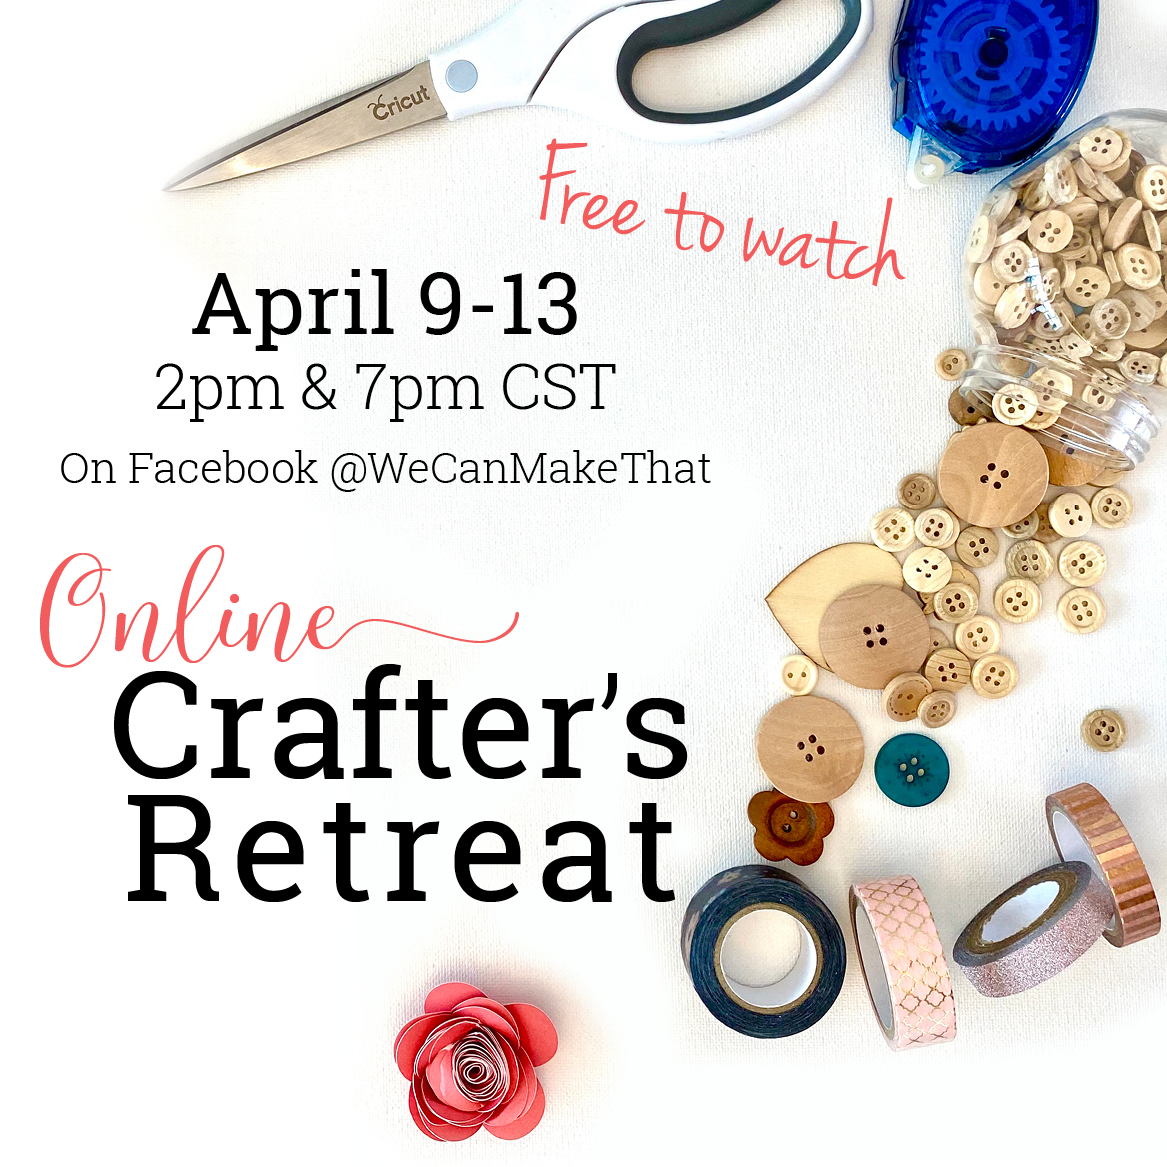 Online Crafter’s Retreat